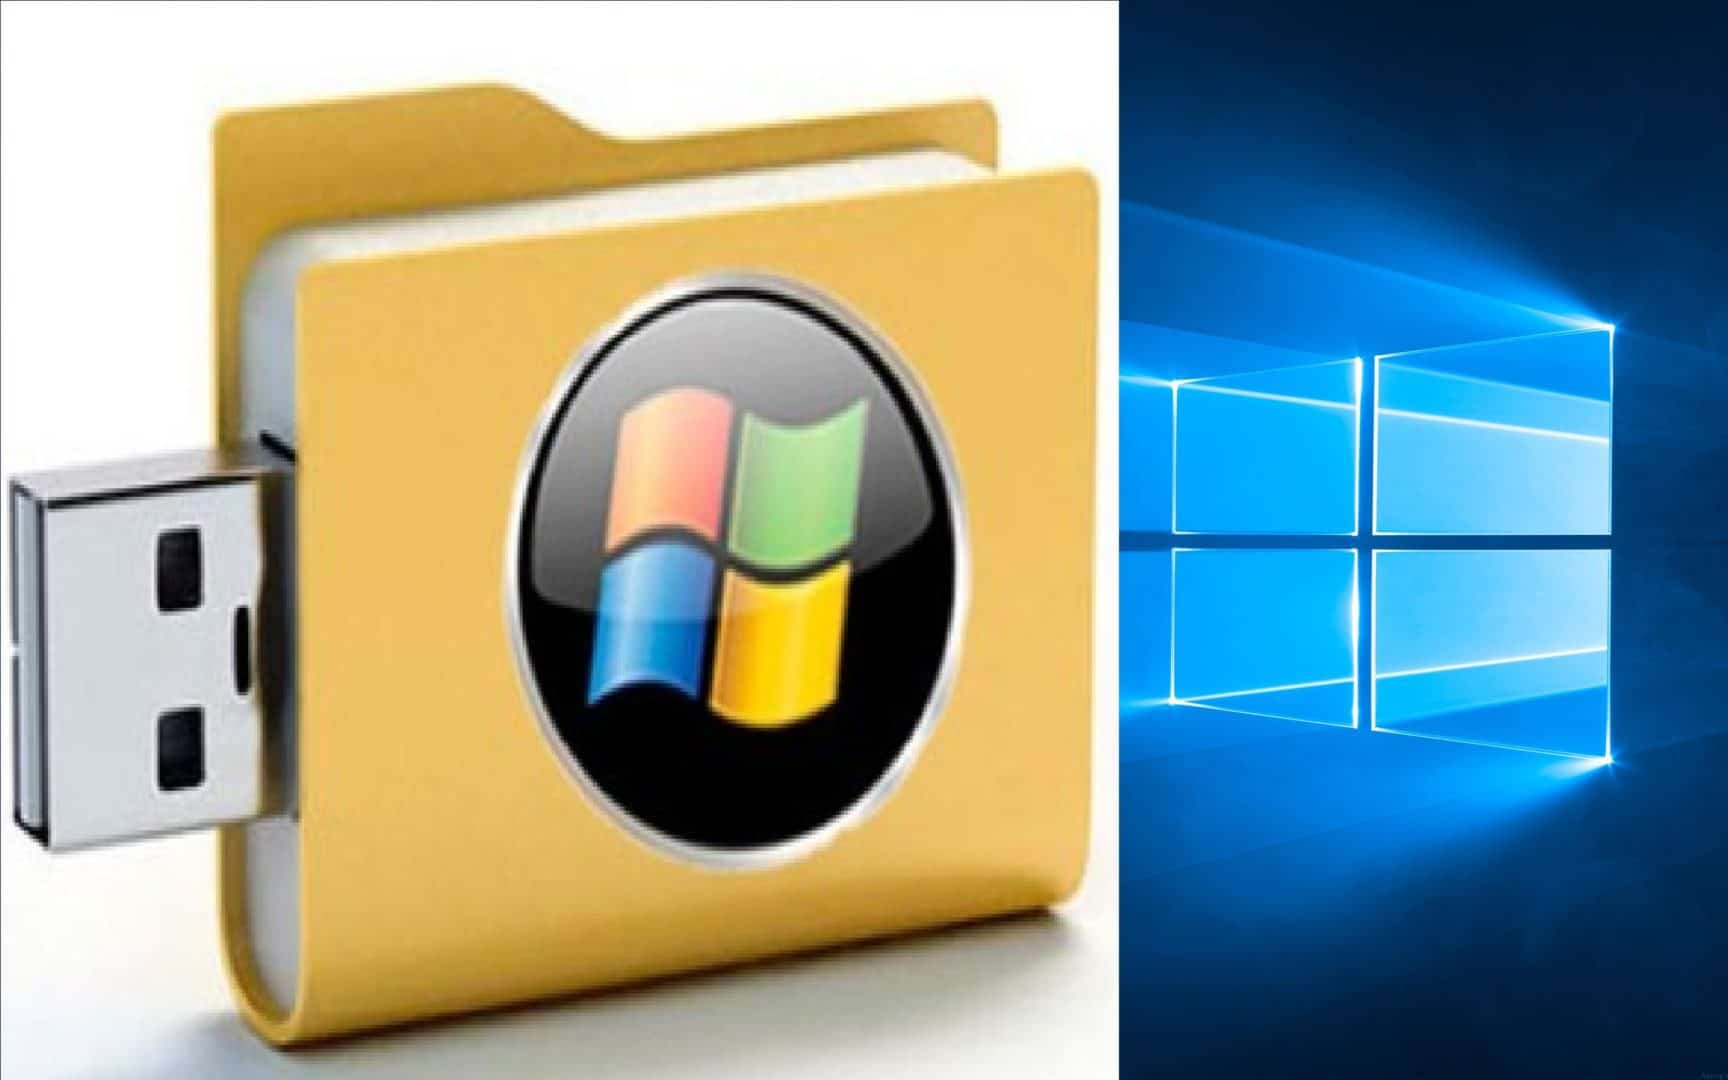 Windows 10 driver for external floppy drive